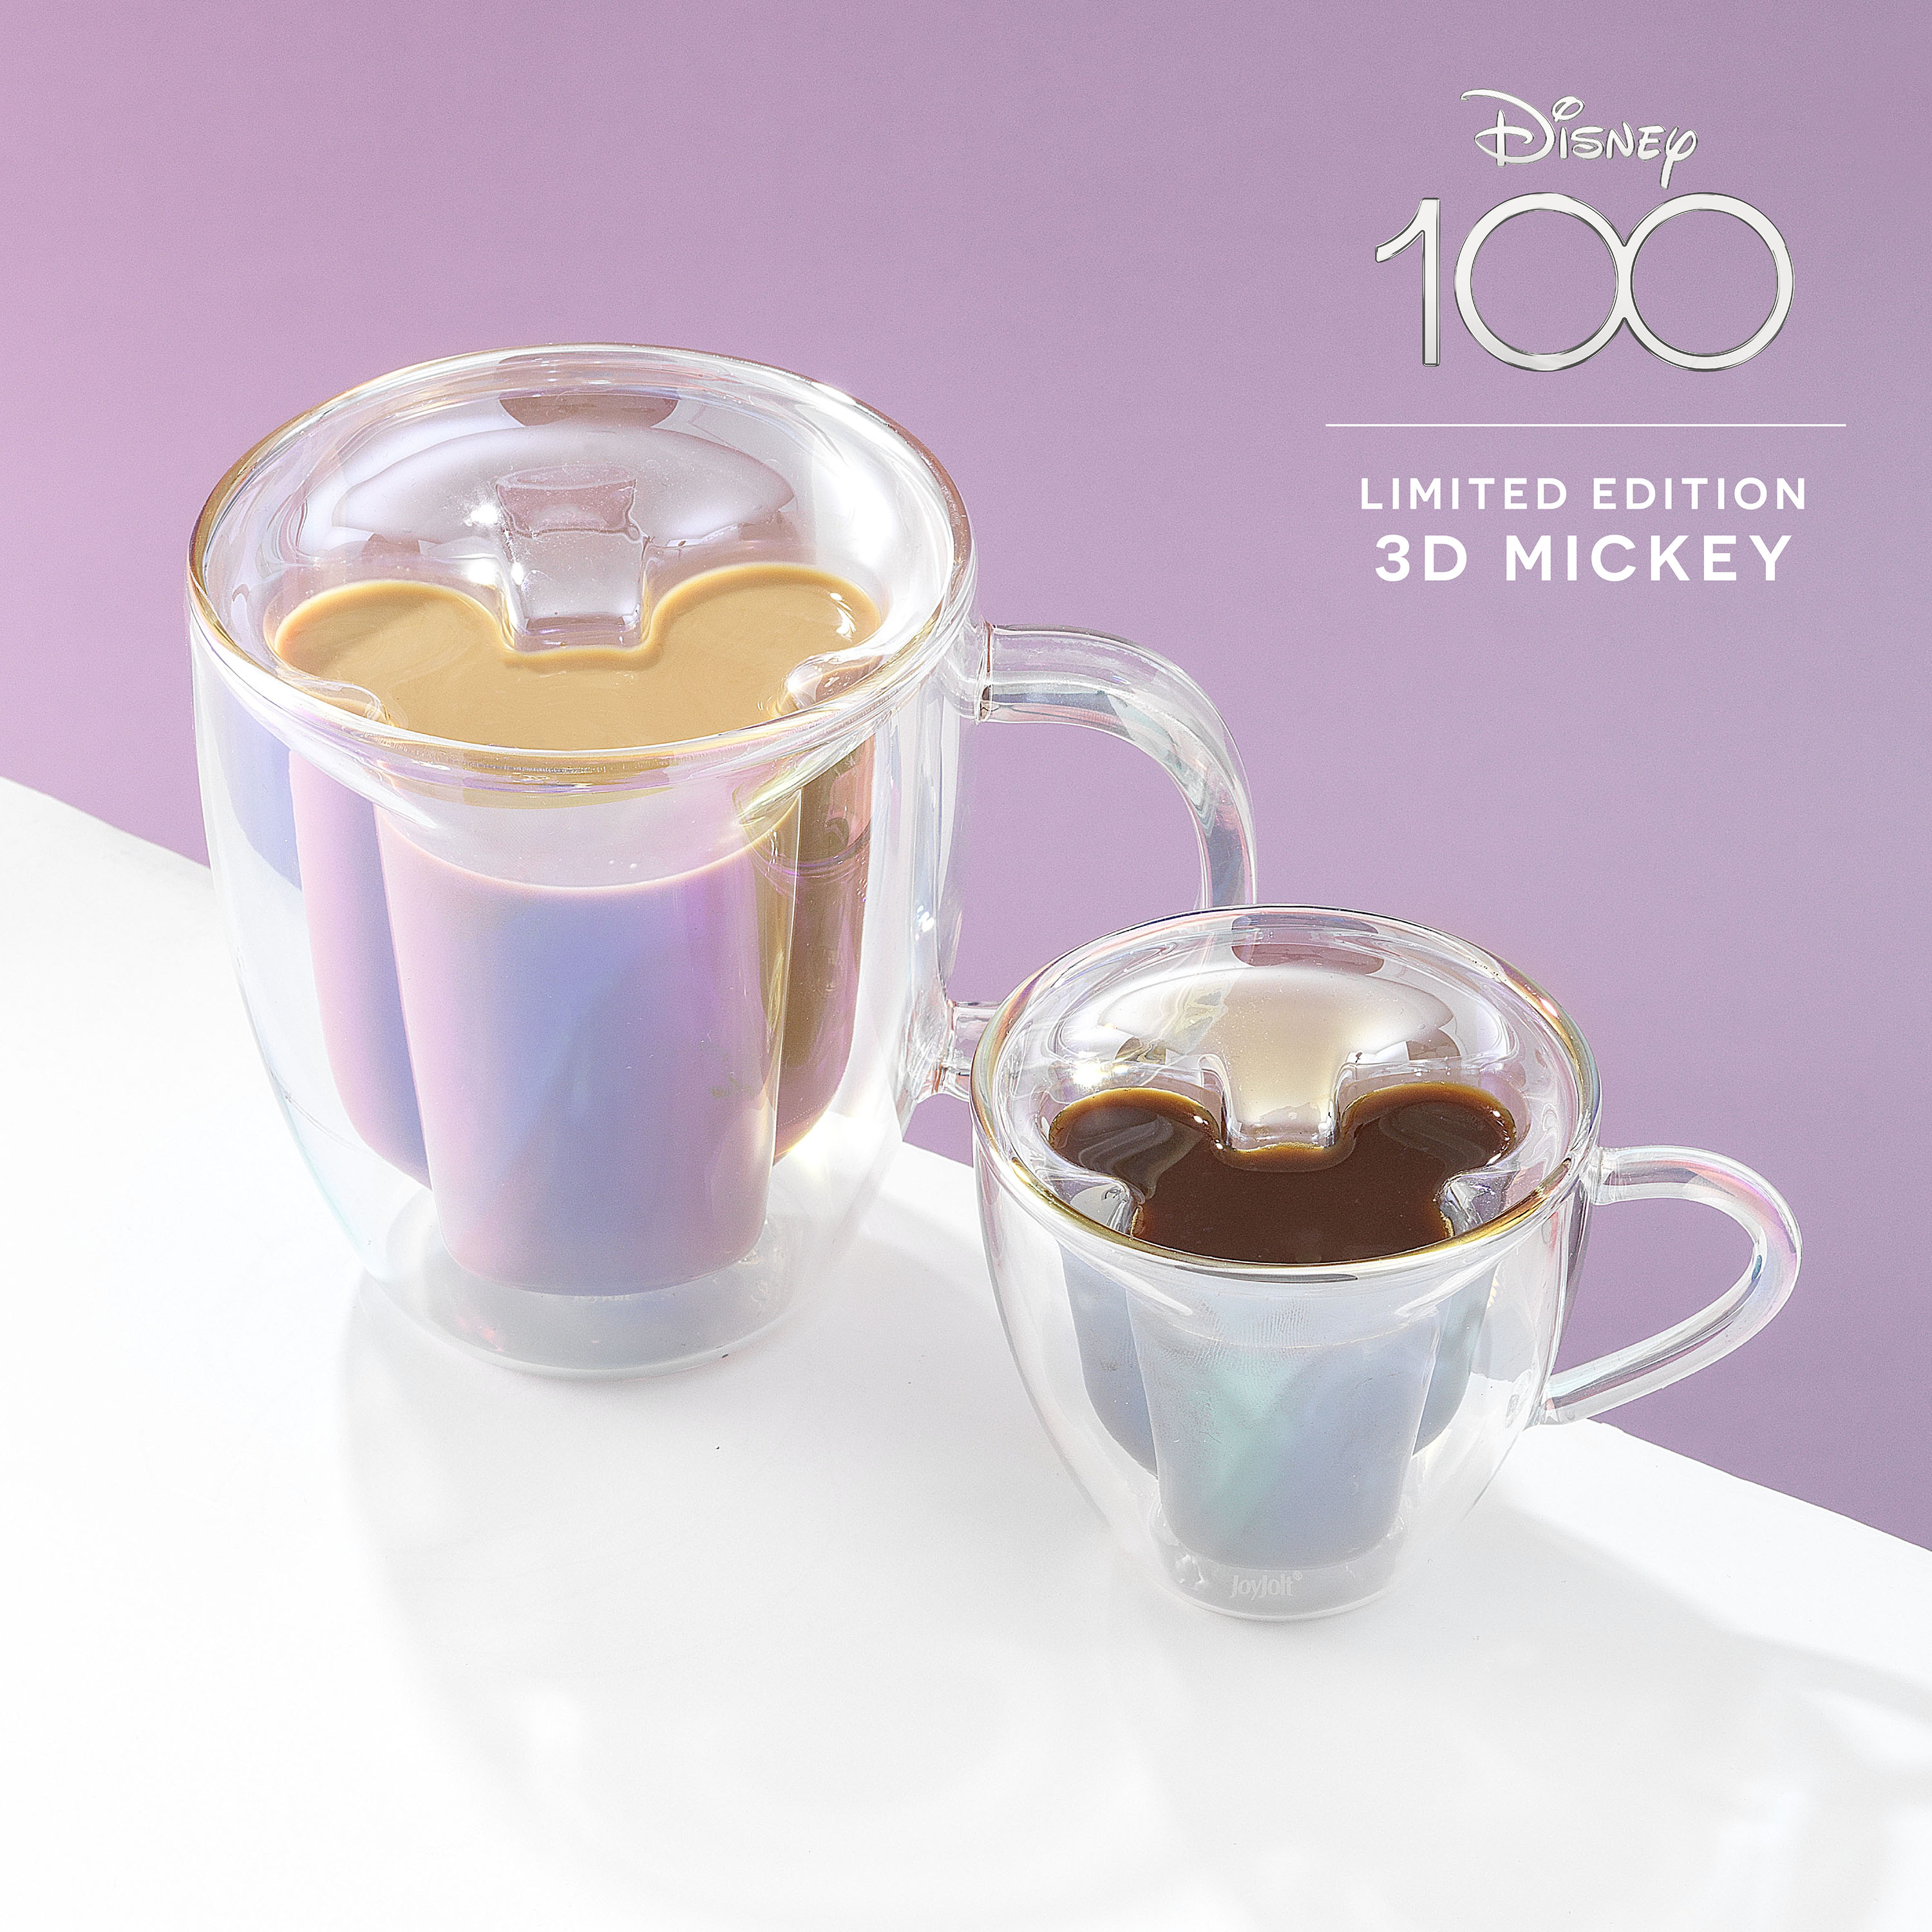 Disney100 Limited Edition 3D Mickey Double Wall Glass Mug - 10 oz